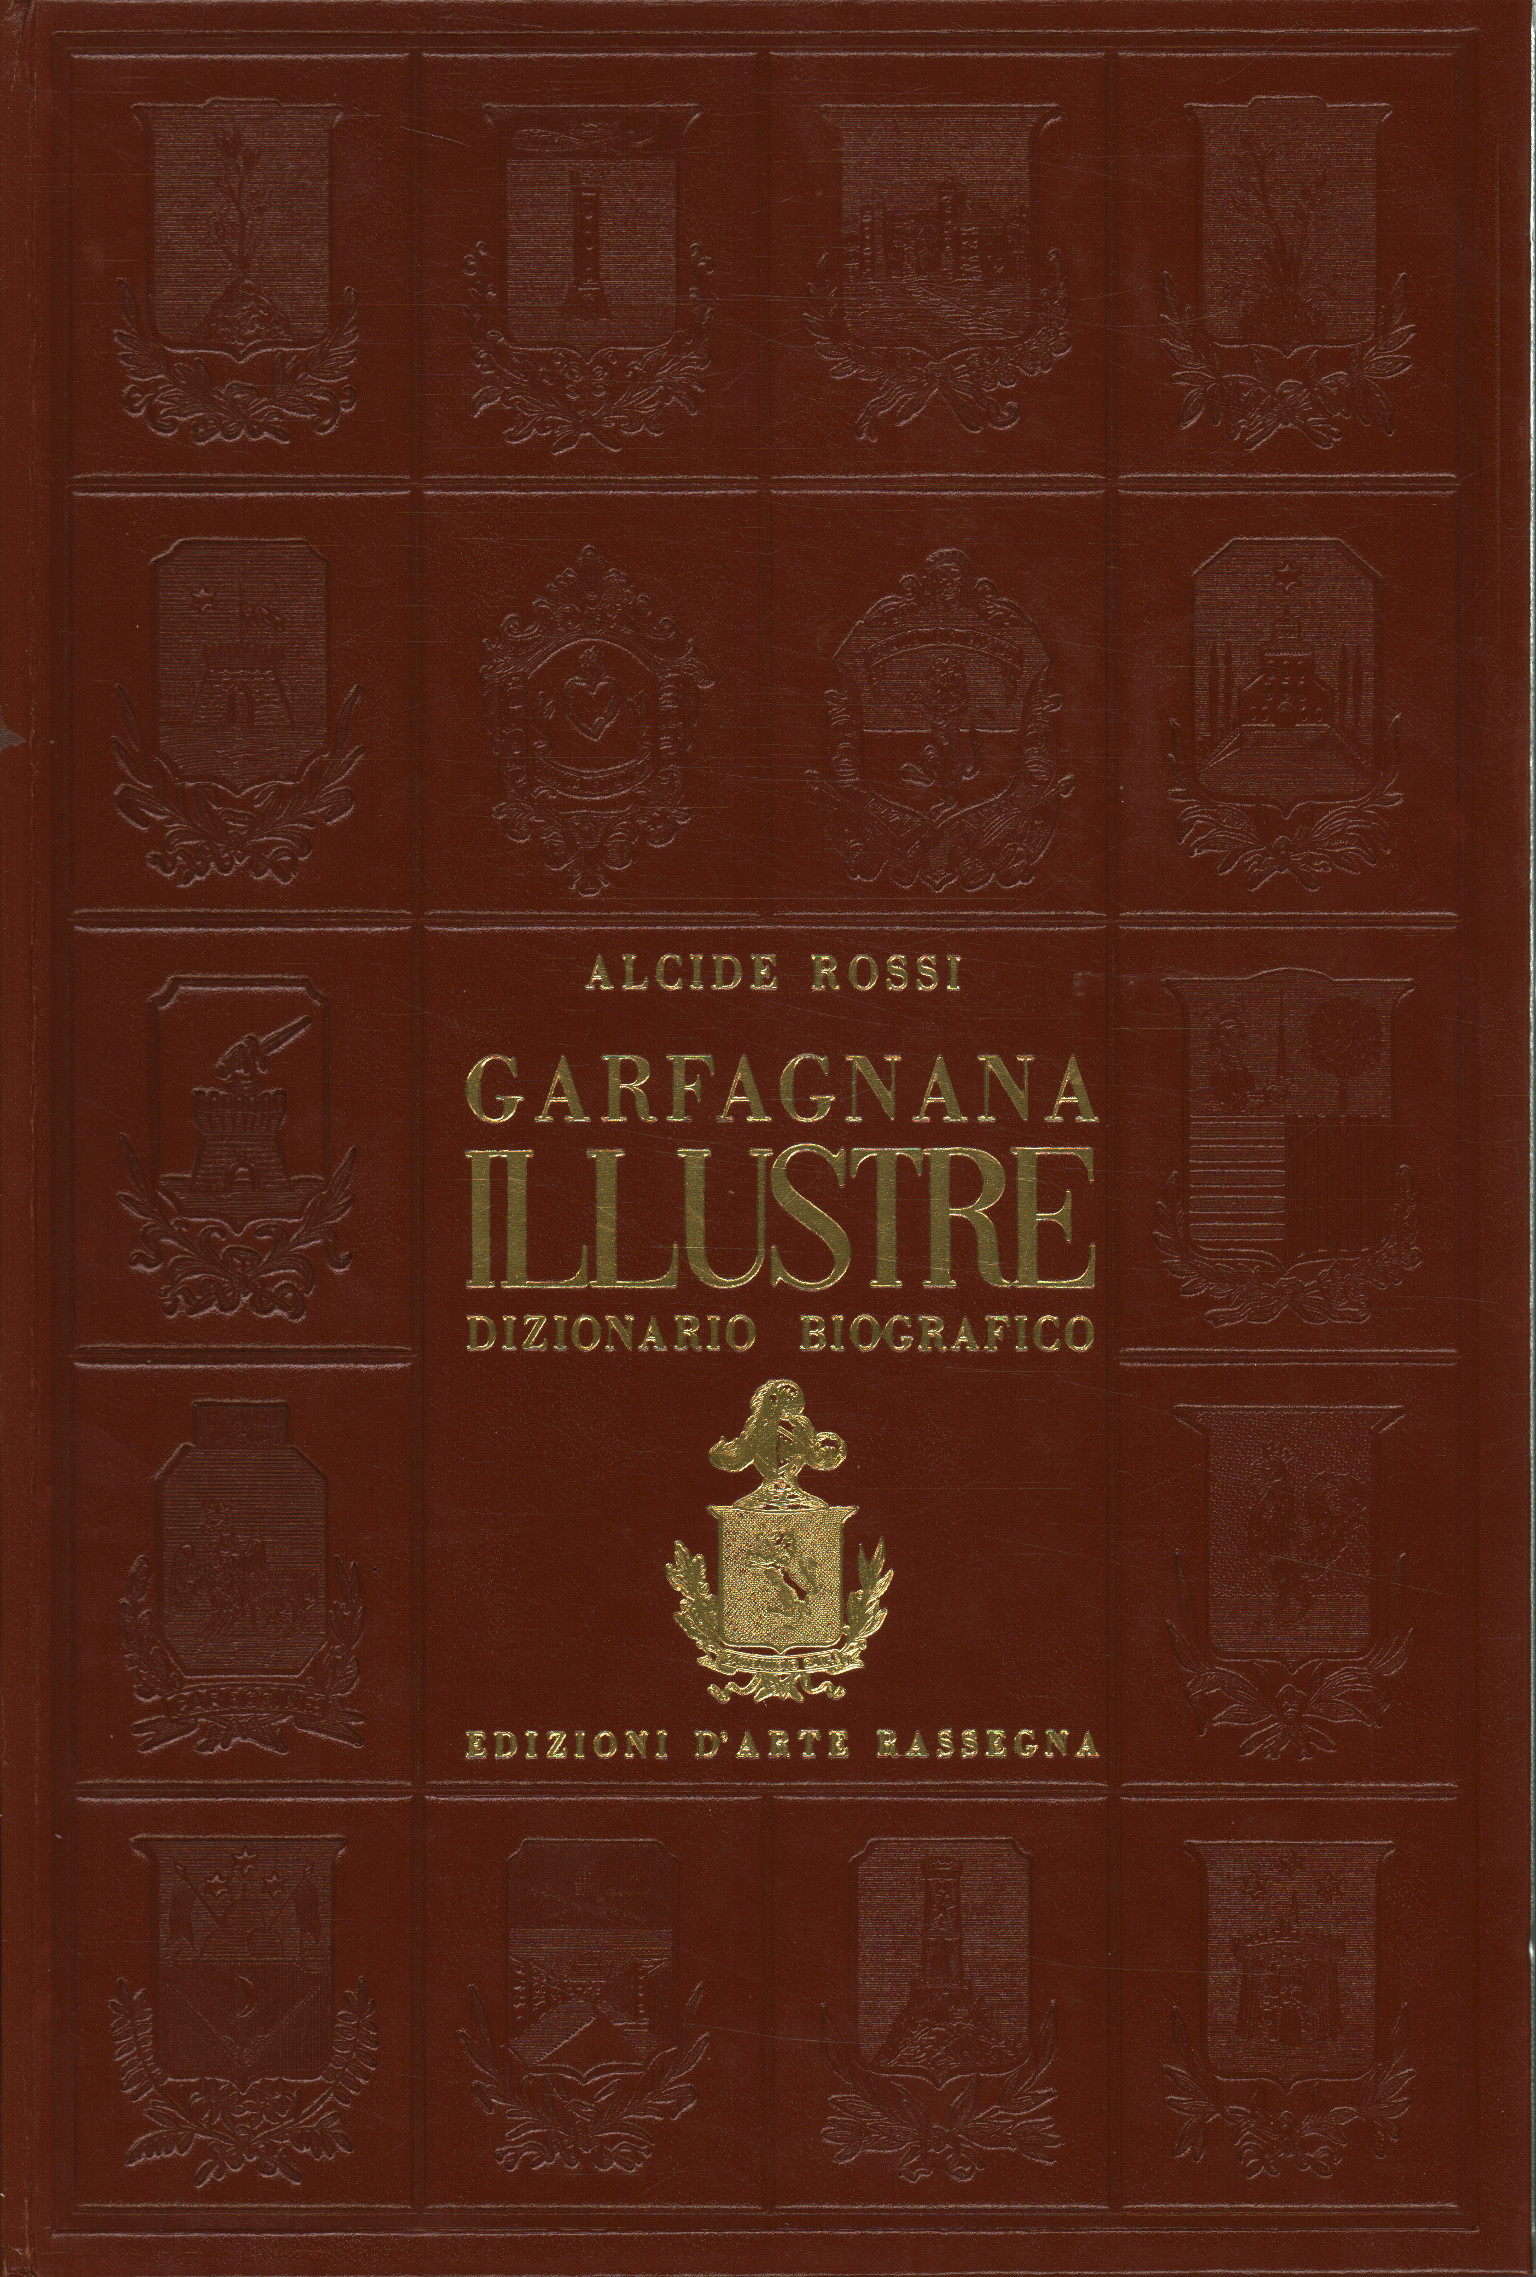 Illustre Garfagnana. Dictionnaire biographique